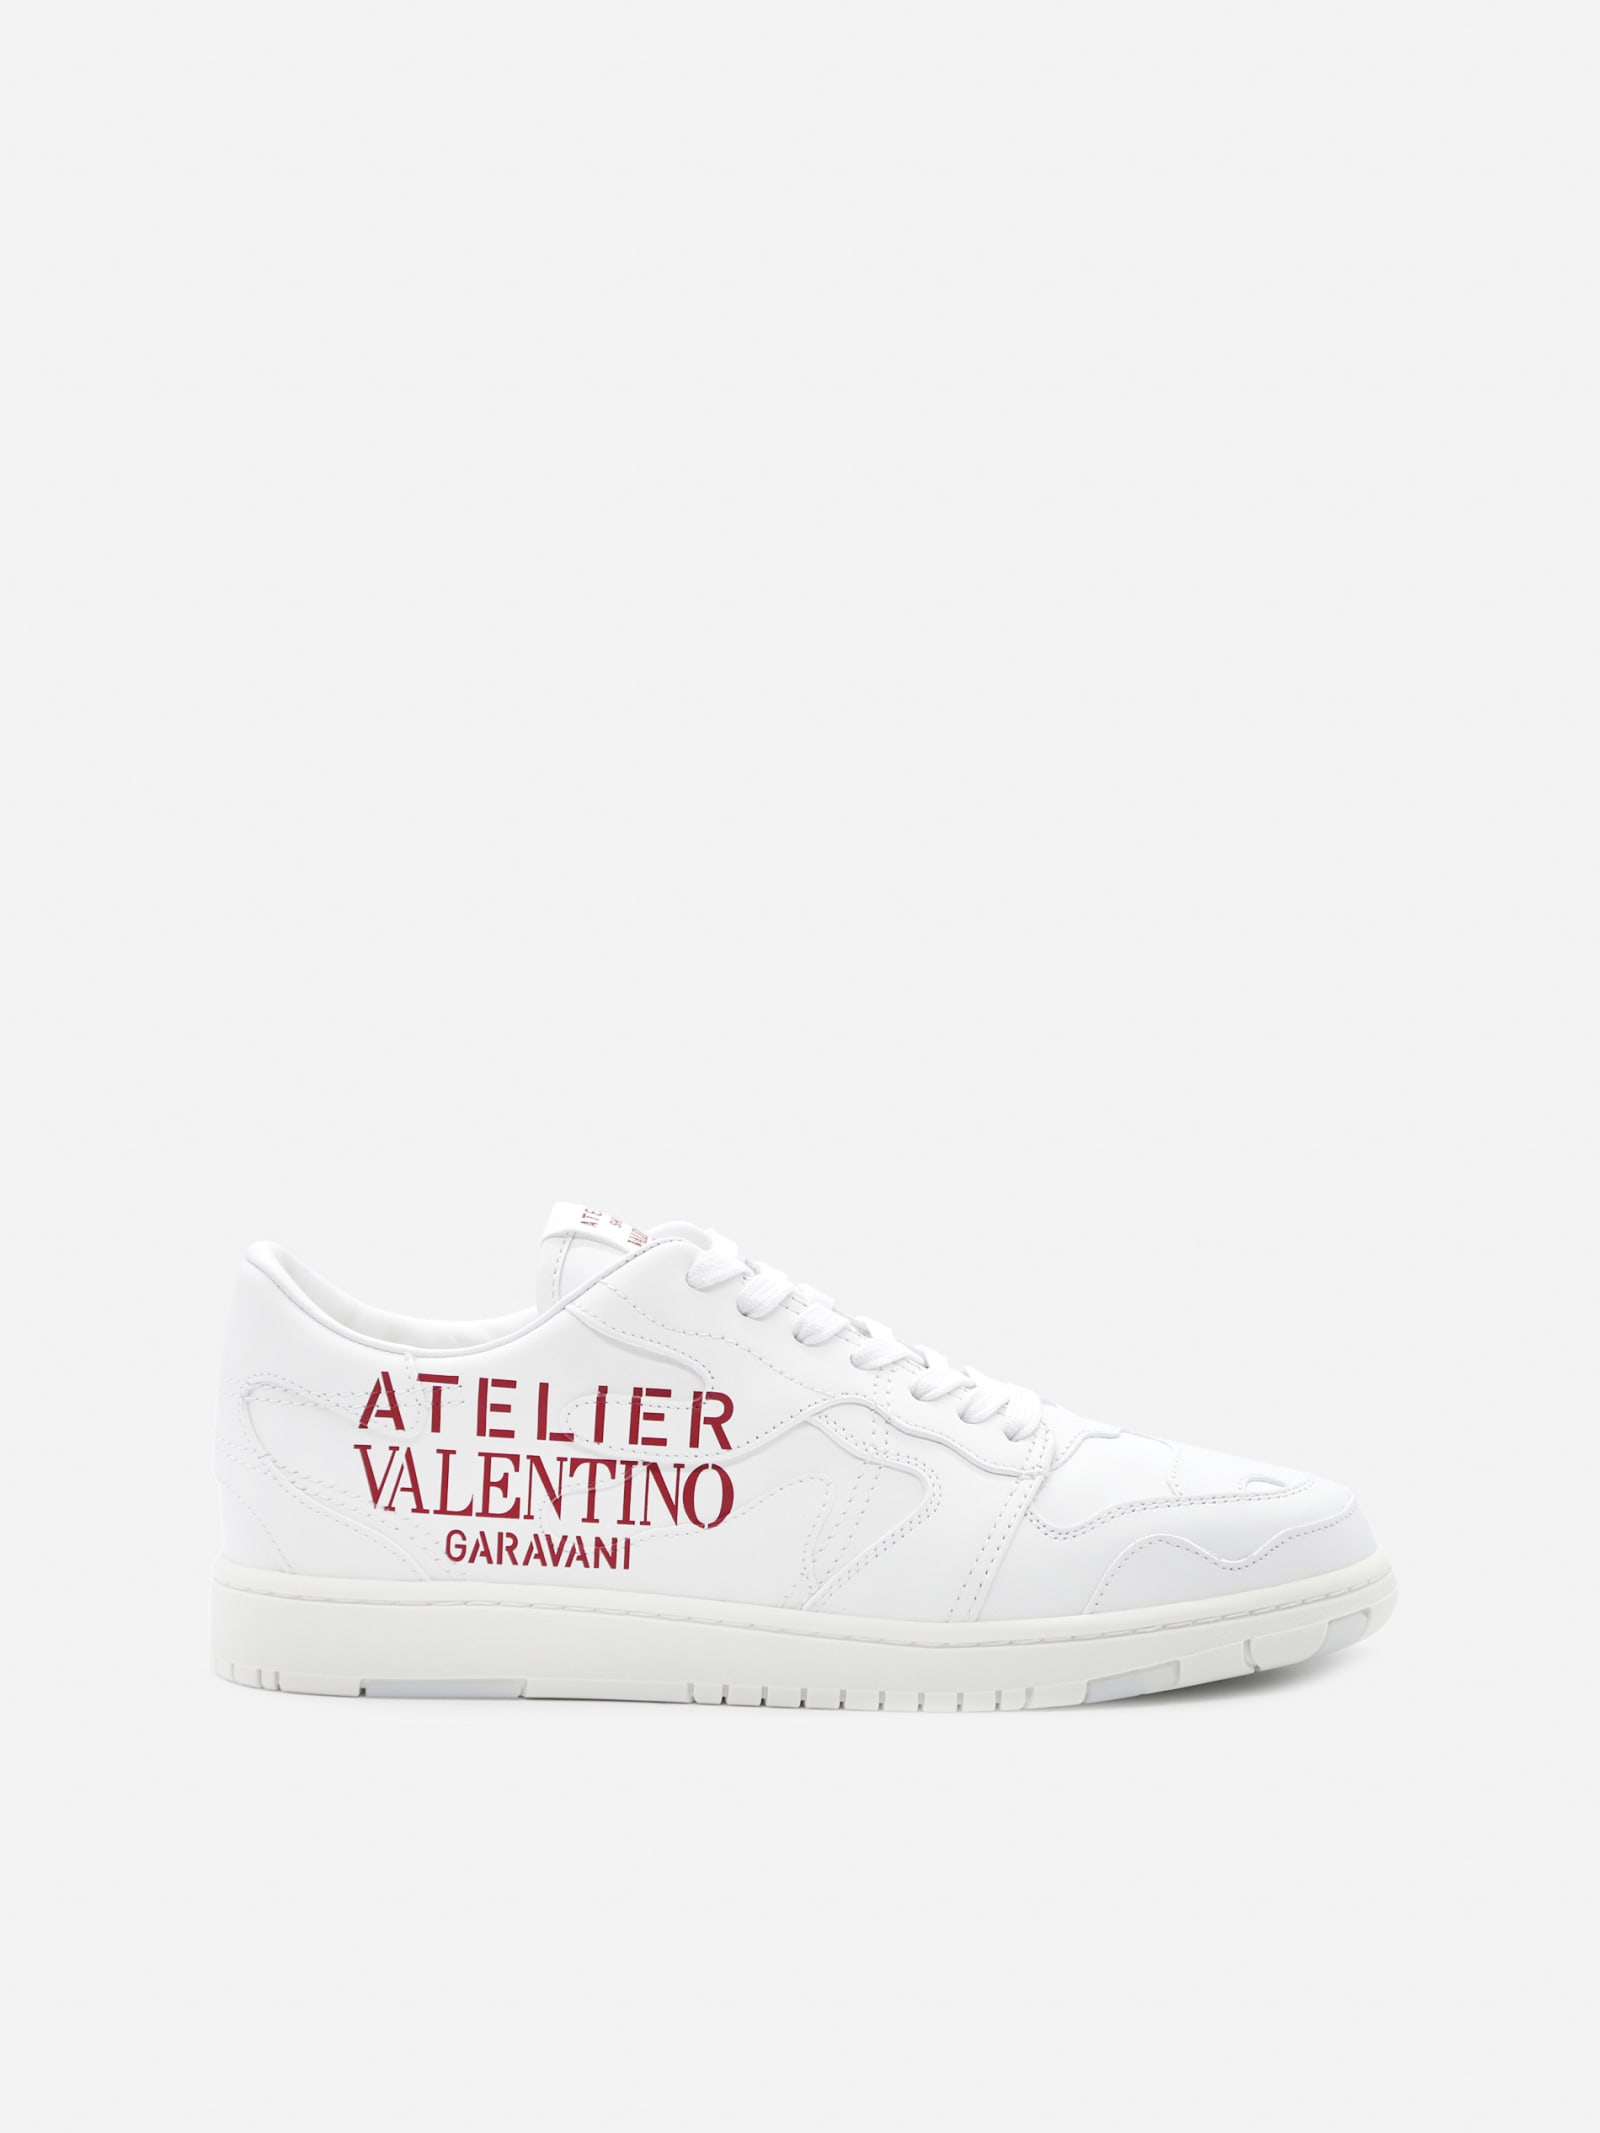 Valentino Garavani Atelier Shoes 07 Sneakers In Leather